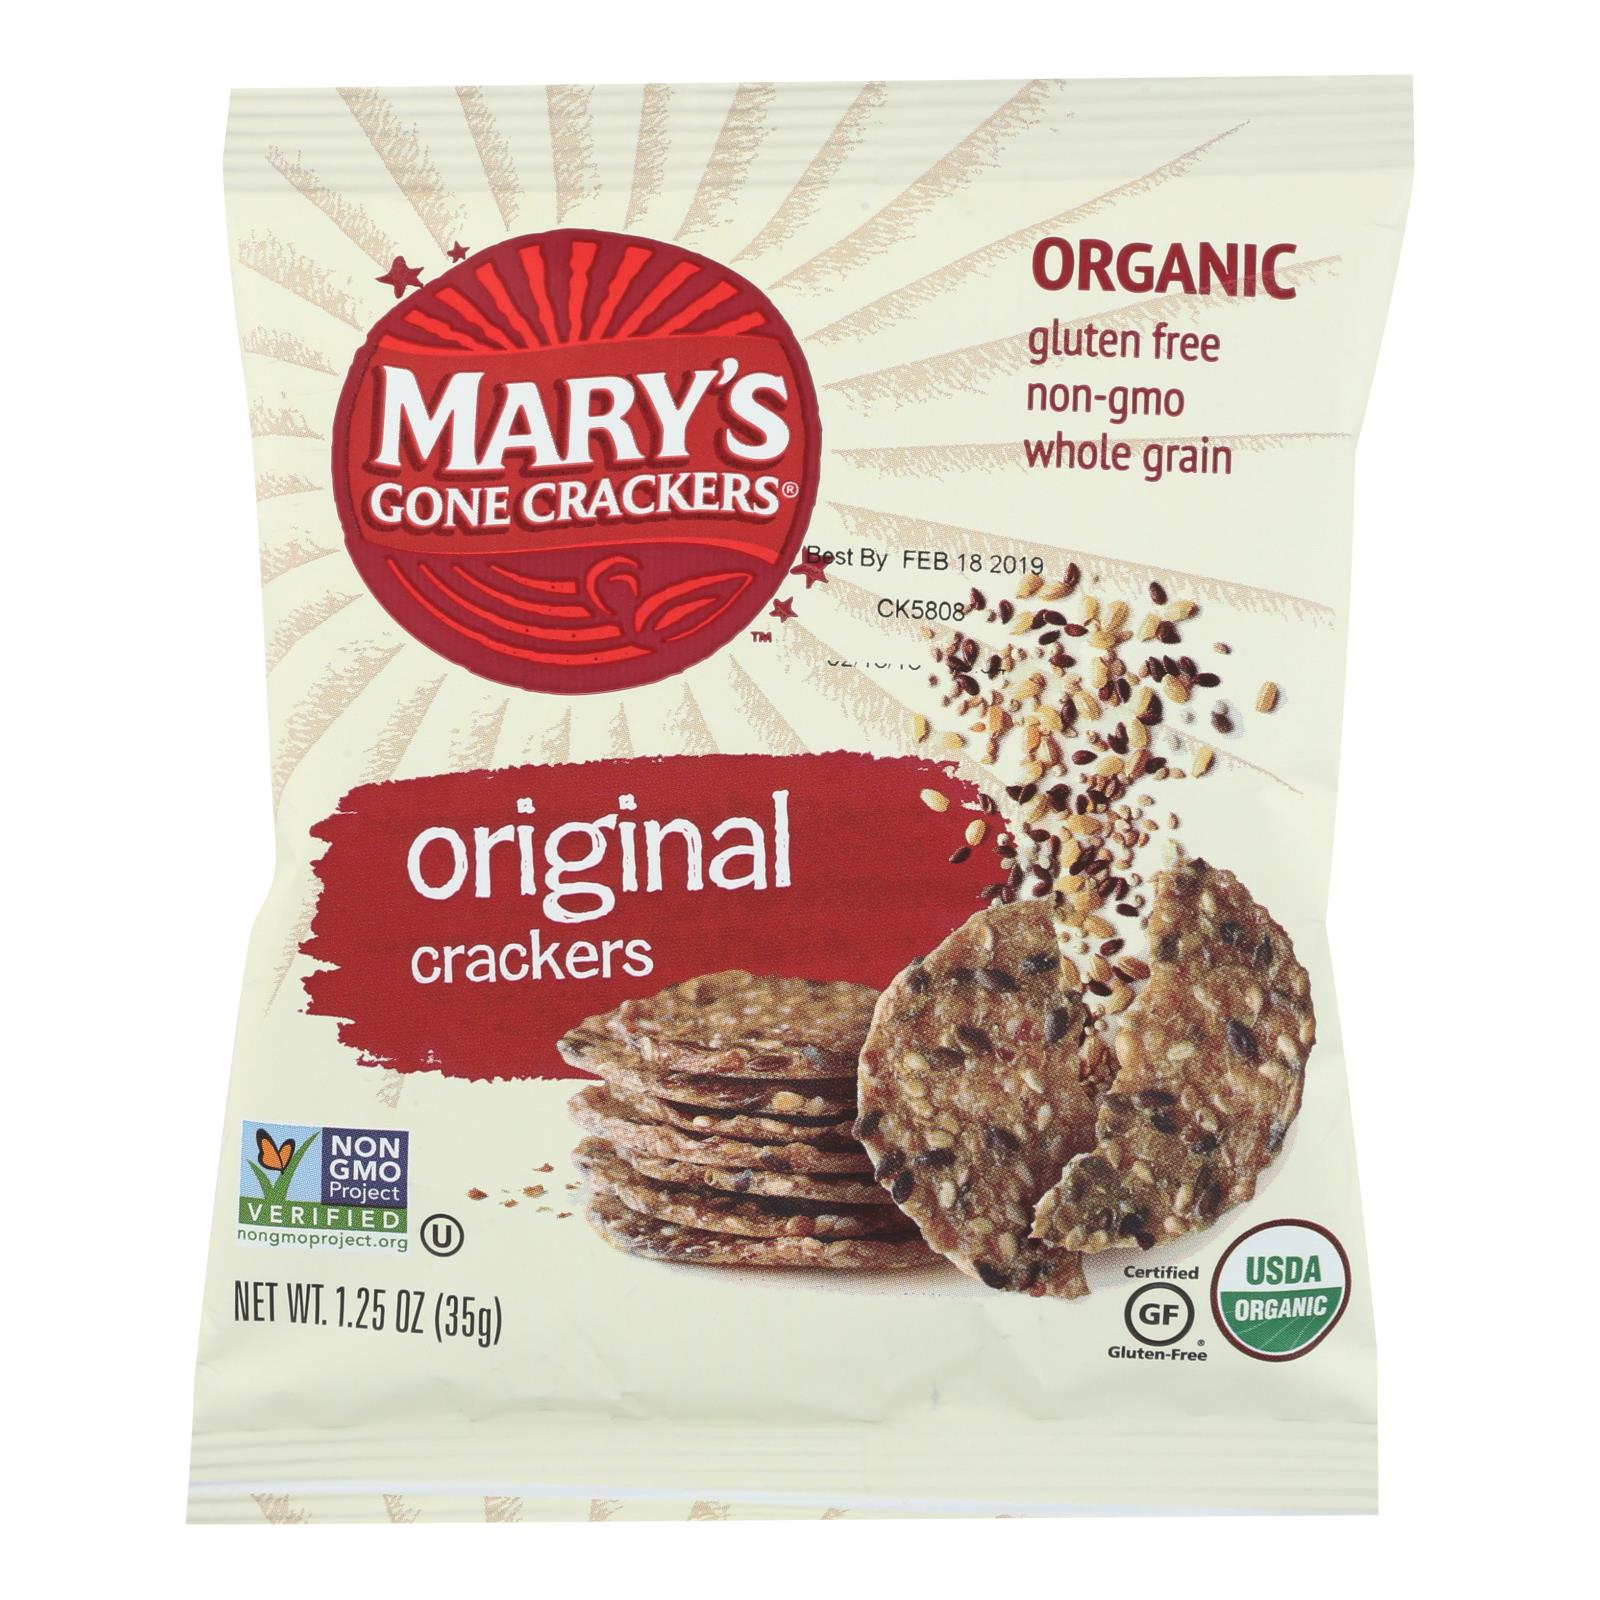 Craquelins de Mary's Gone, Mary's Gone Crackers Original Crackers - Caisse de 20 - 1.25 OZ (paquet de 20)